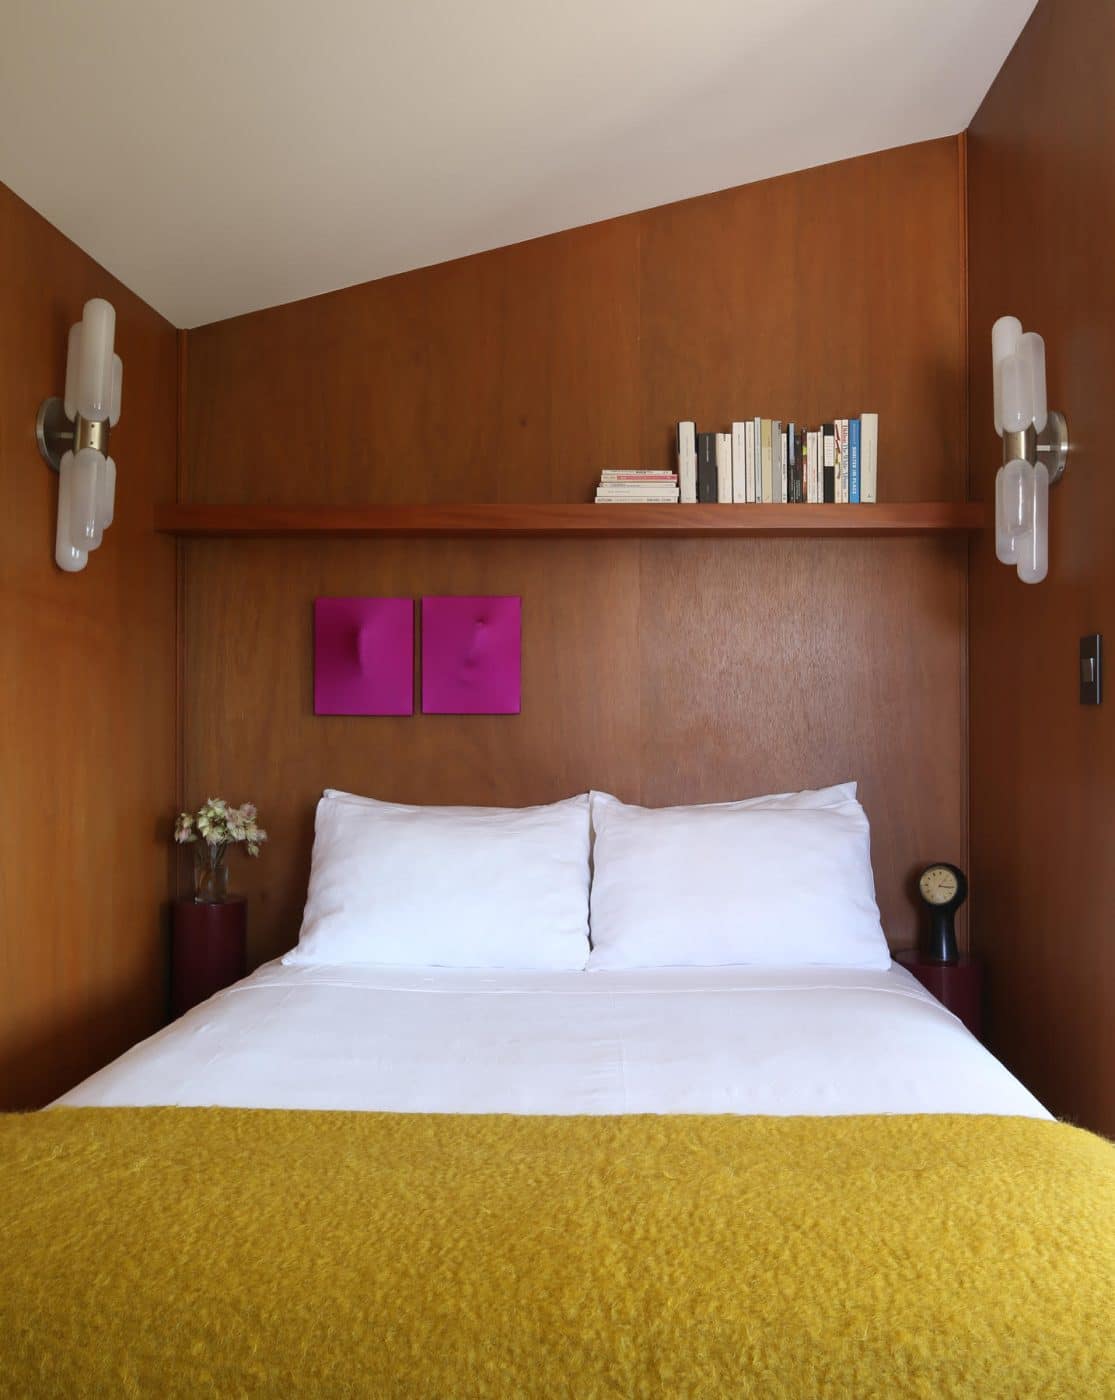 The bedroom of Giampiero Tagliaferri's home in L.A.'s Silver Lake neighborhood